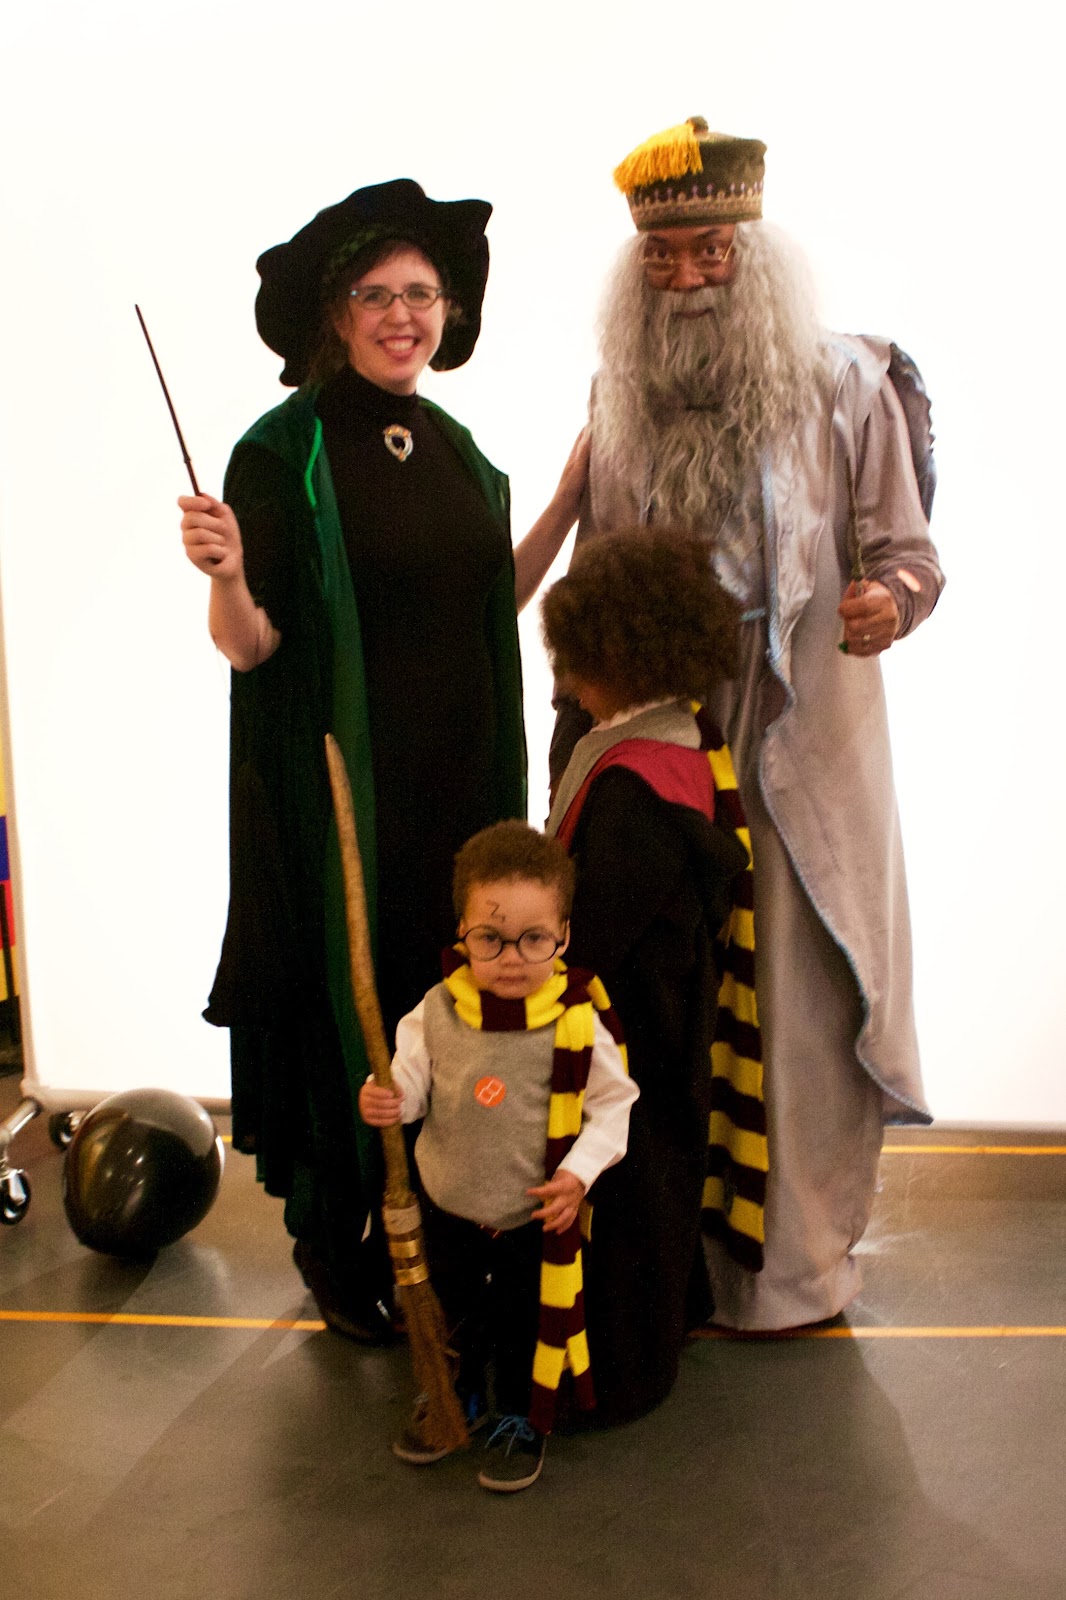 dumbledore costume for kids